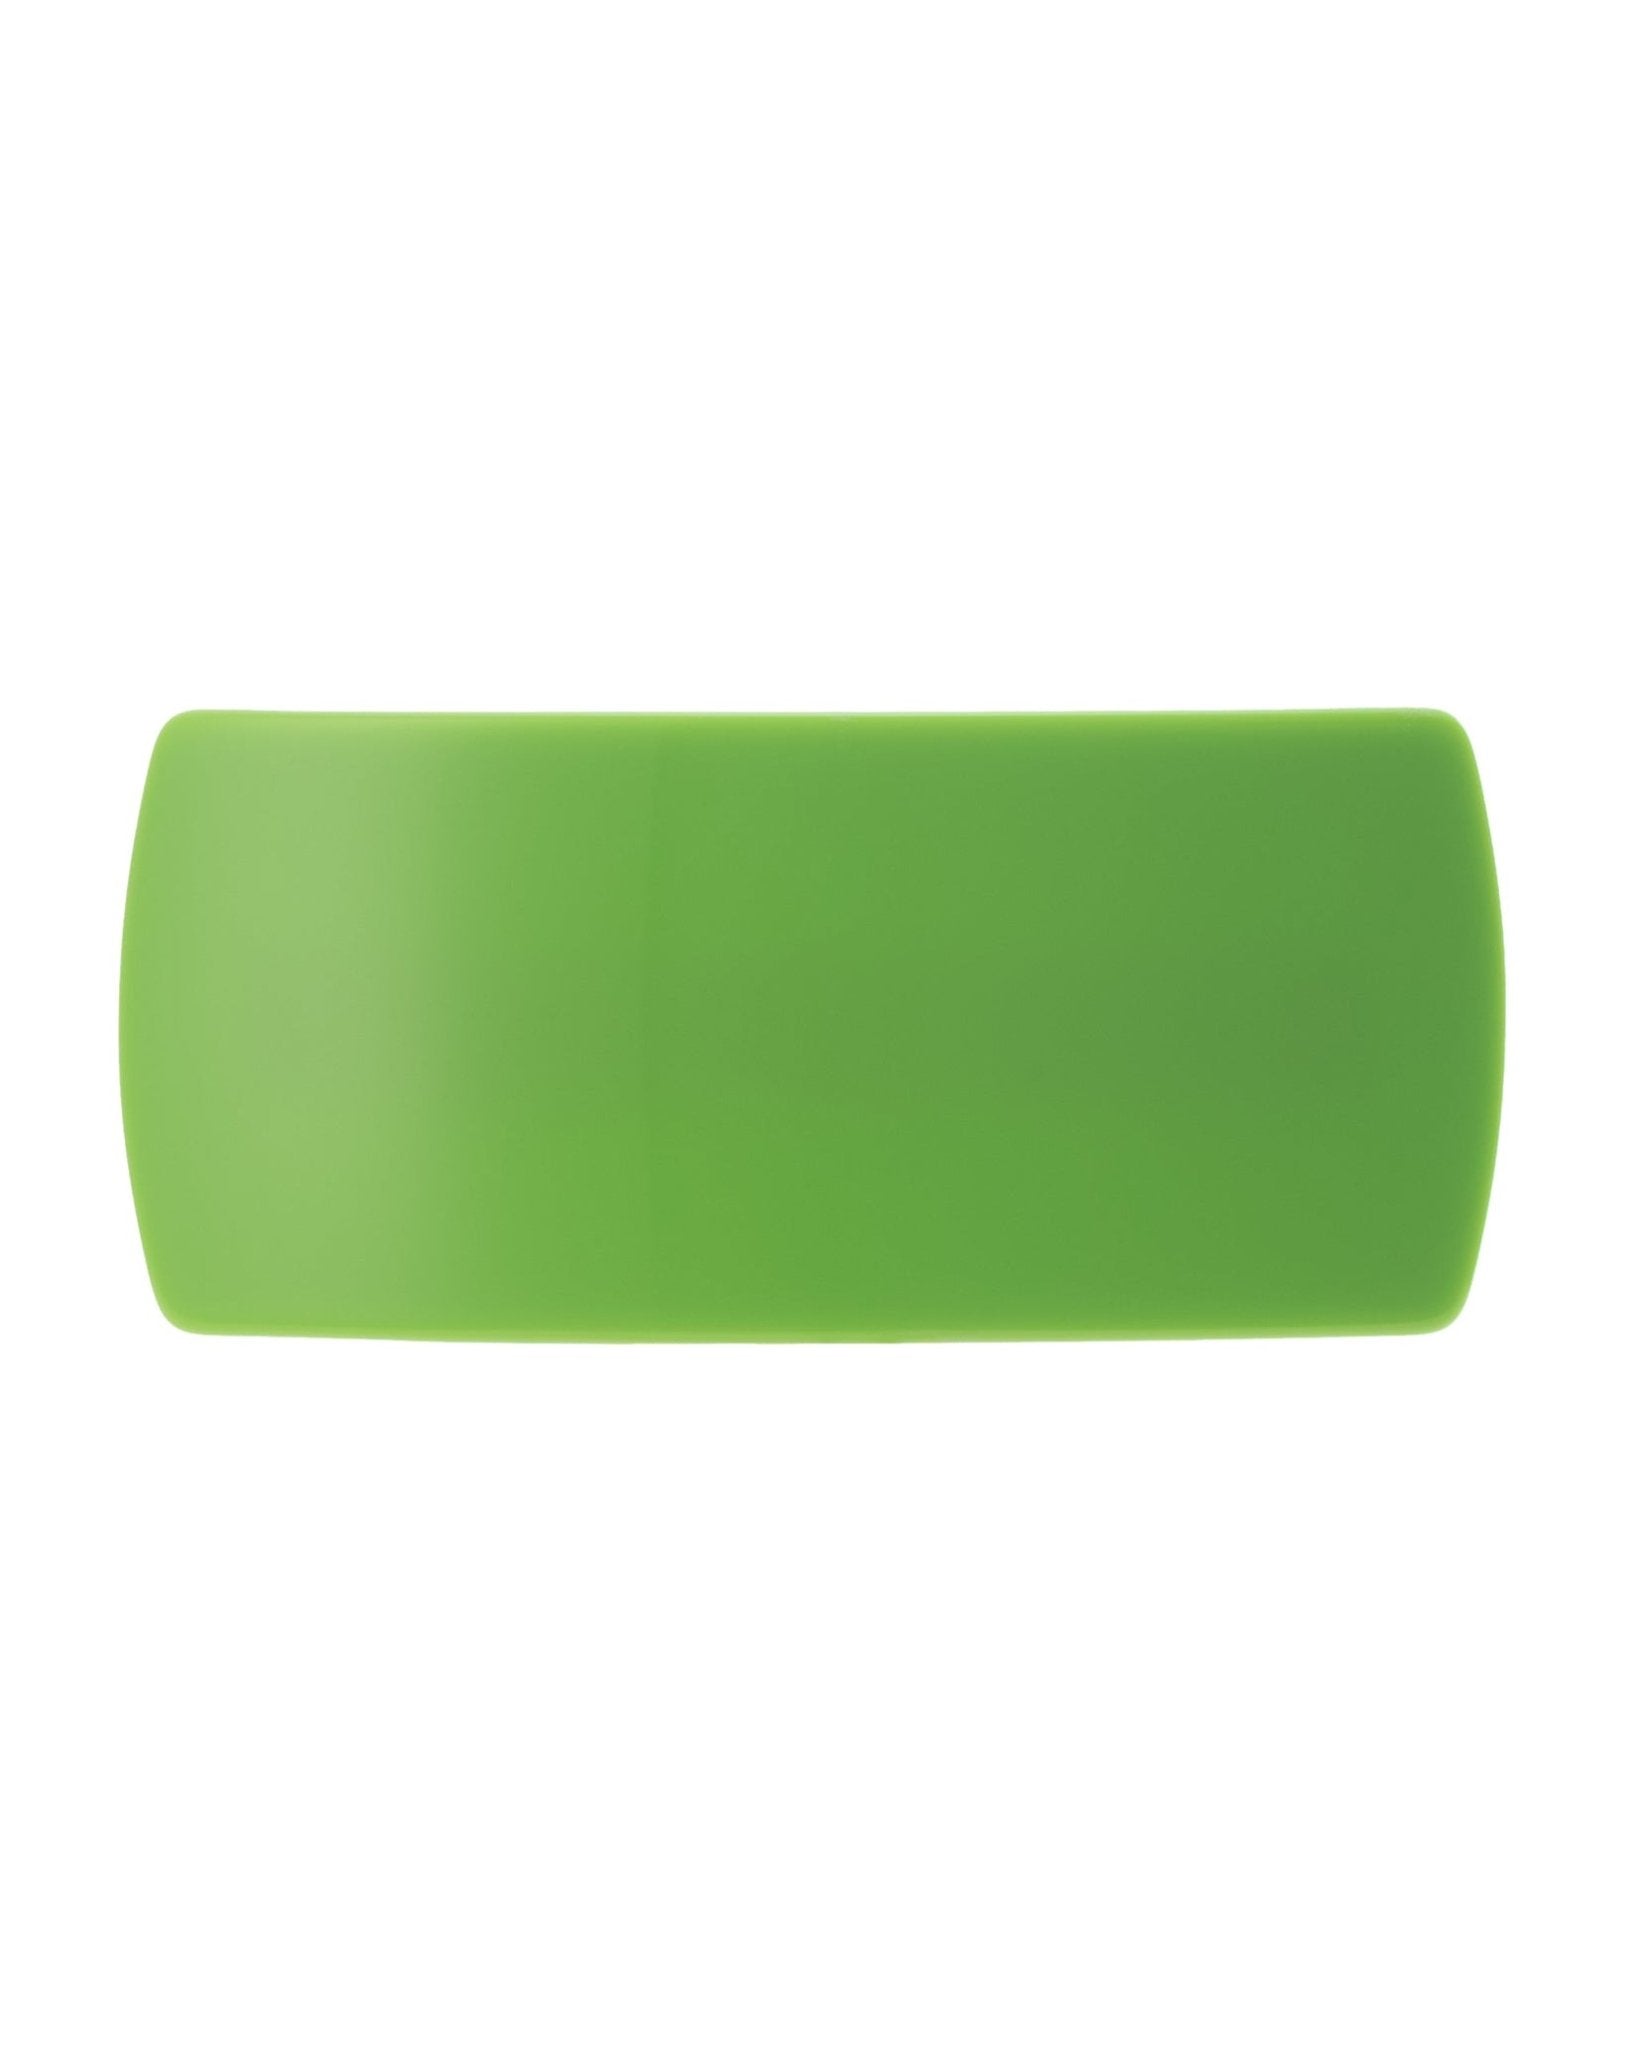 Jumbo Box Clip in Neon Green - MACHETE